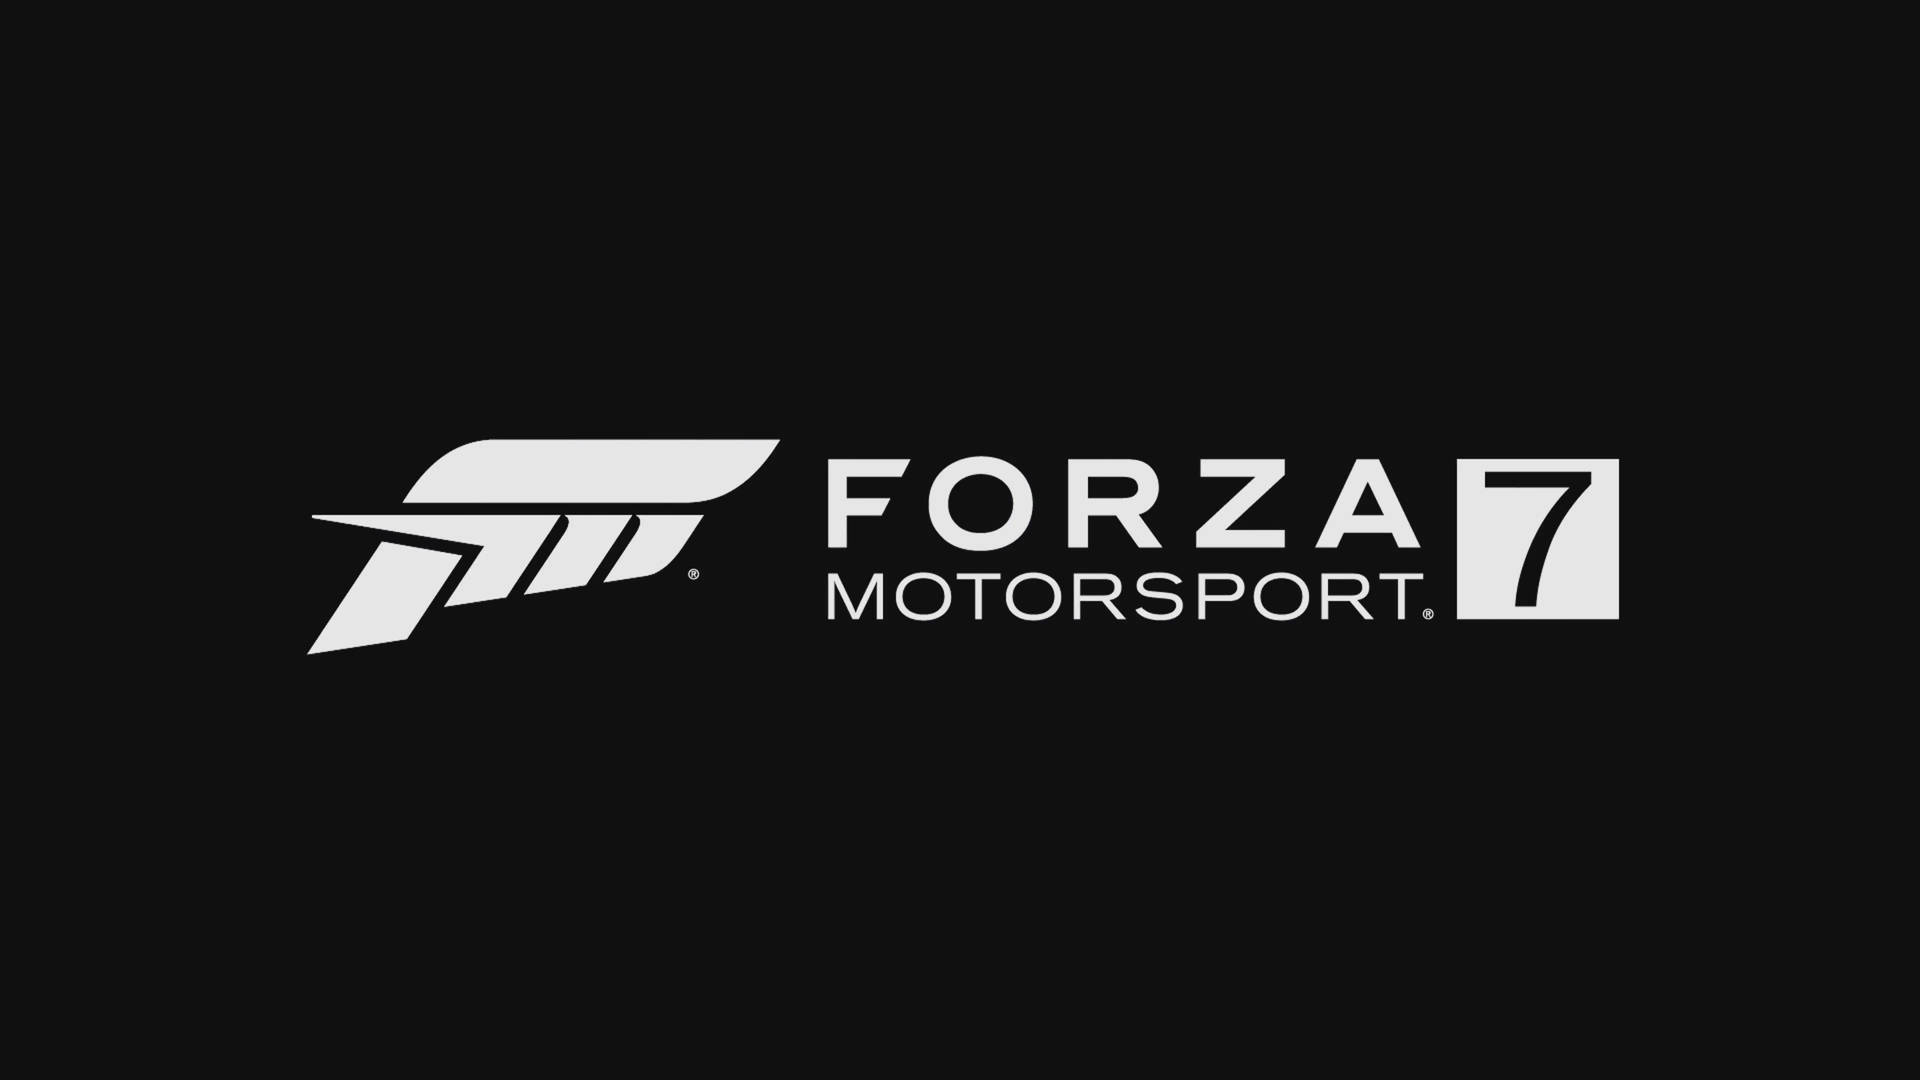 Forza Motorsport 7 Advanced Game Logo Wallpaper